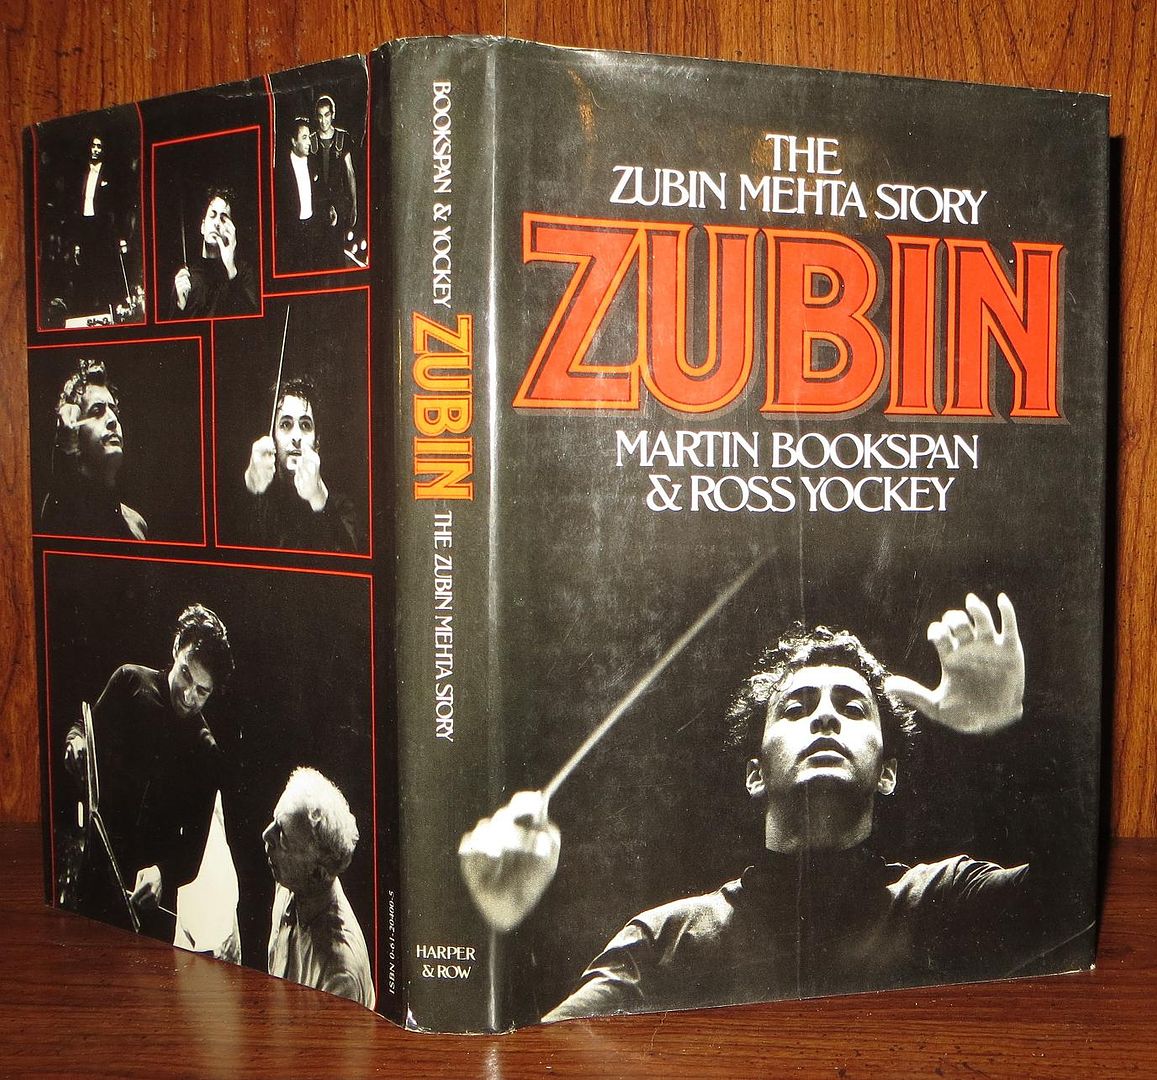 BOOKSPAN, MARTIN - ZUBIN MEHTA - Zubin the Zubin Mehta Story